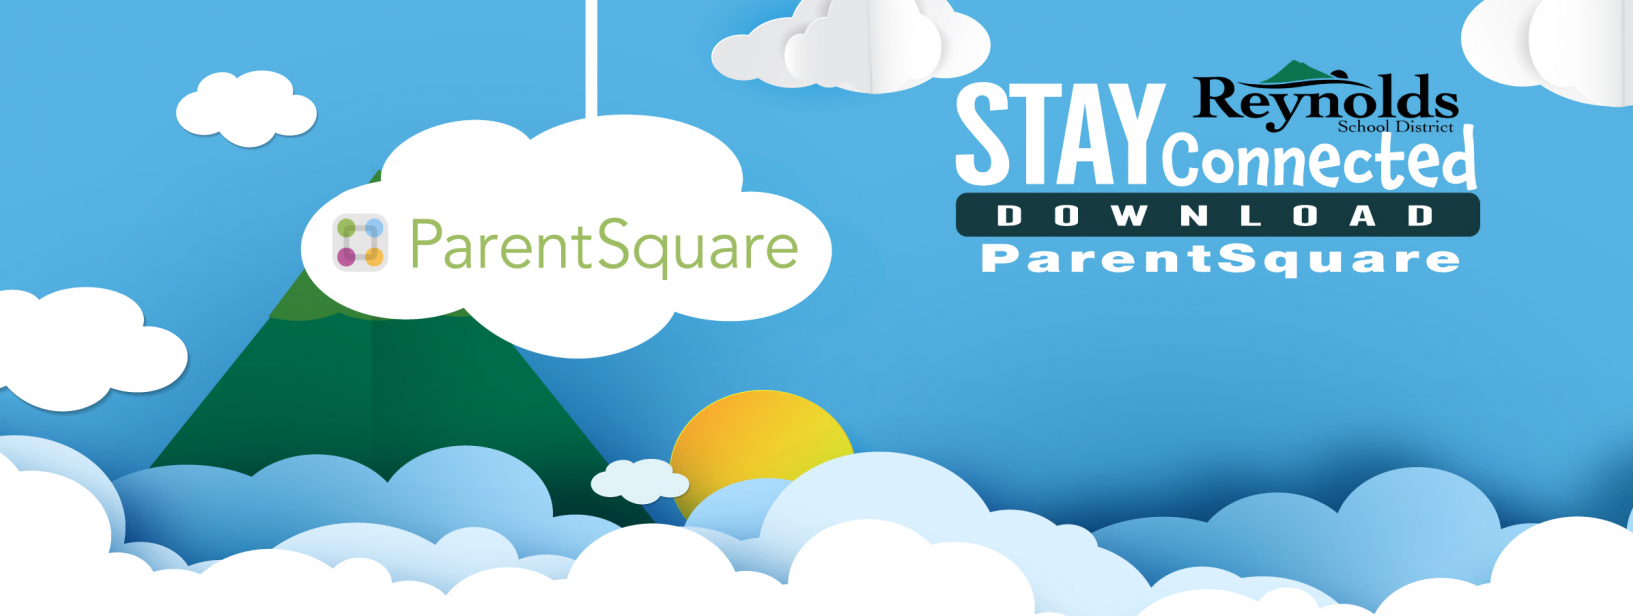 ParentSquare Website Banner